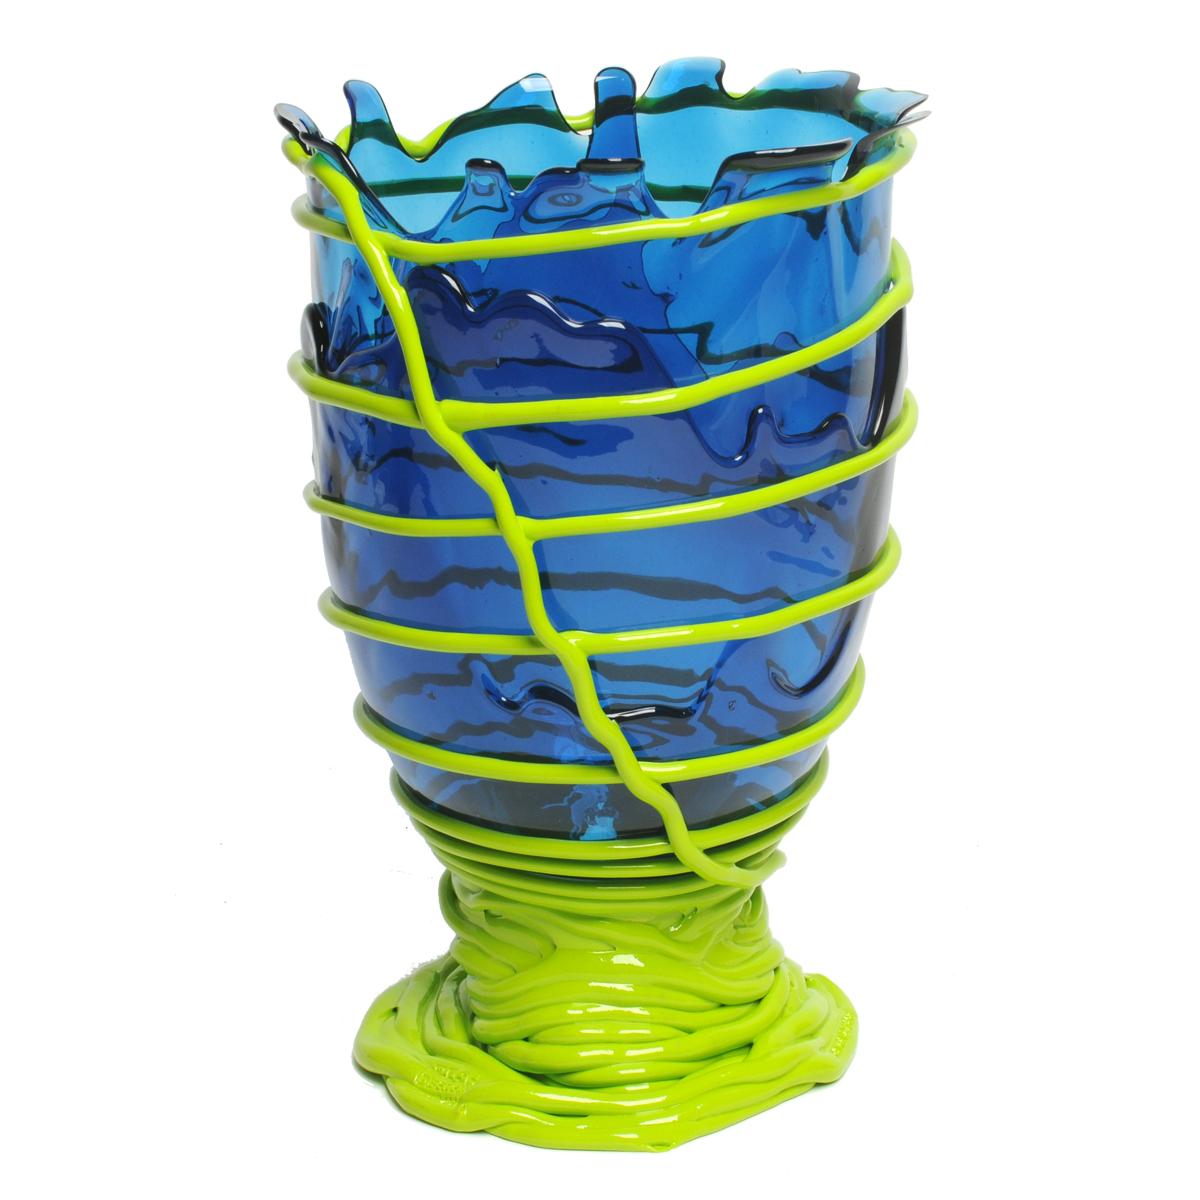 Pompitu II vase, blue, acid green.

Vase in soft resin designed by Gaetano Pesce in 1995 for Fish Design collection.

Measures: M ø 16cm x H 26cm

Other sizes available

Colours: Blue, acid green.
Vase in soft resin designed by Gaetano